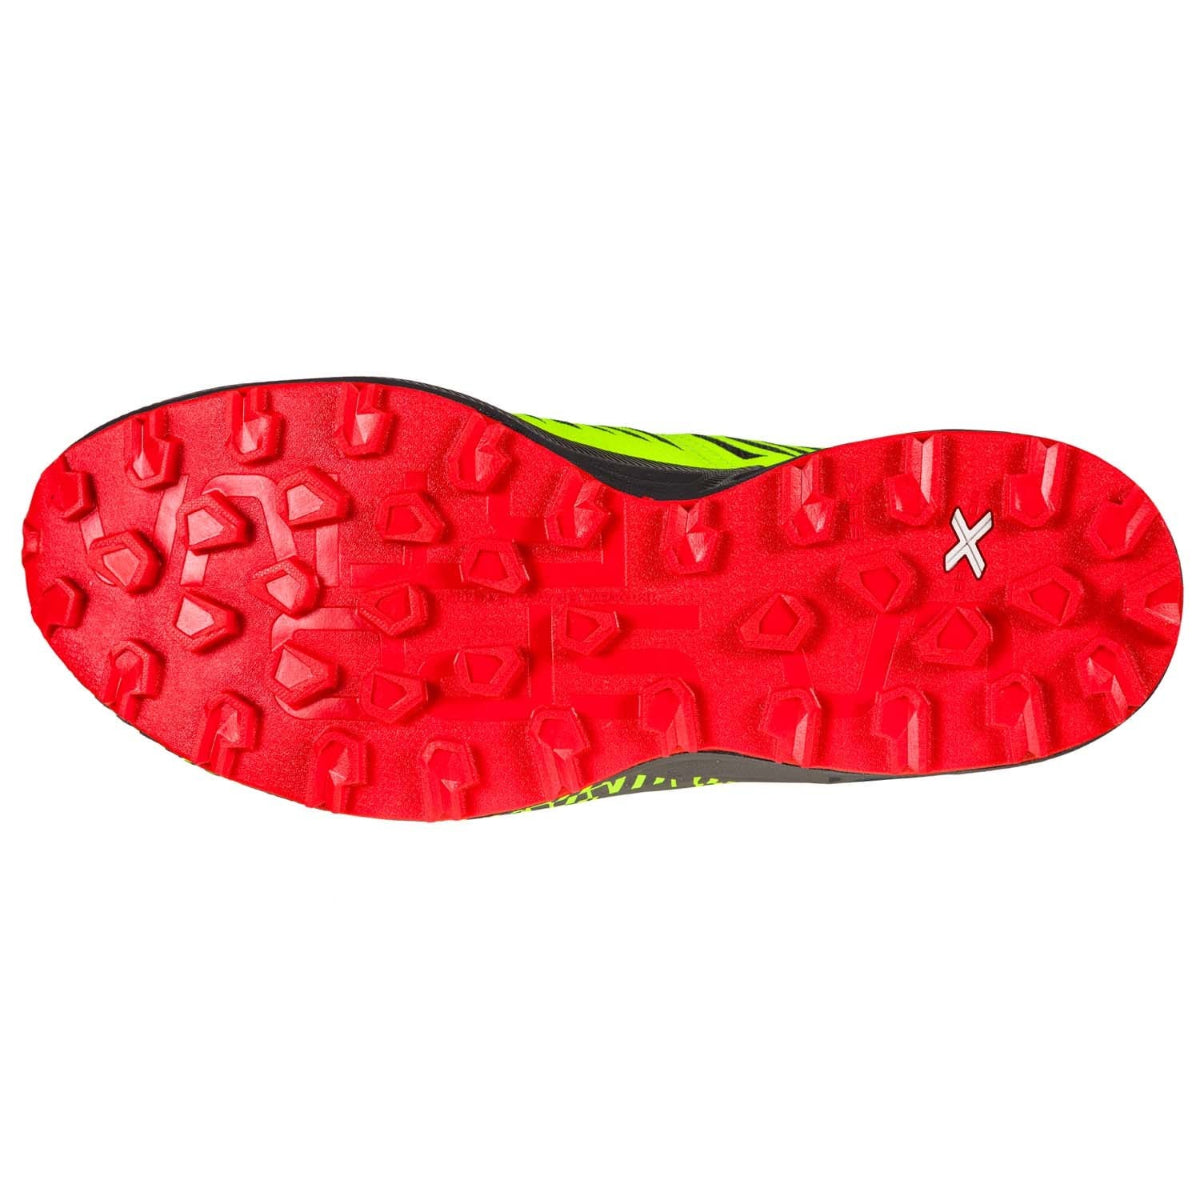 La Sportiva Cyklon (Neon/Goji) running shoe red sole